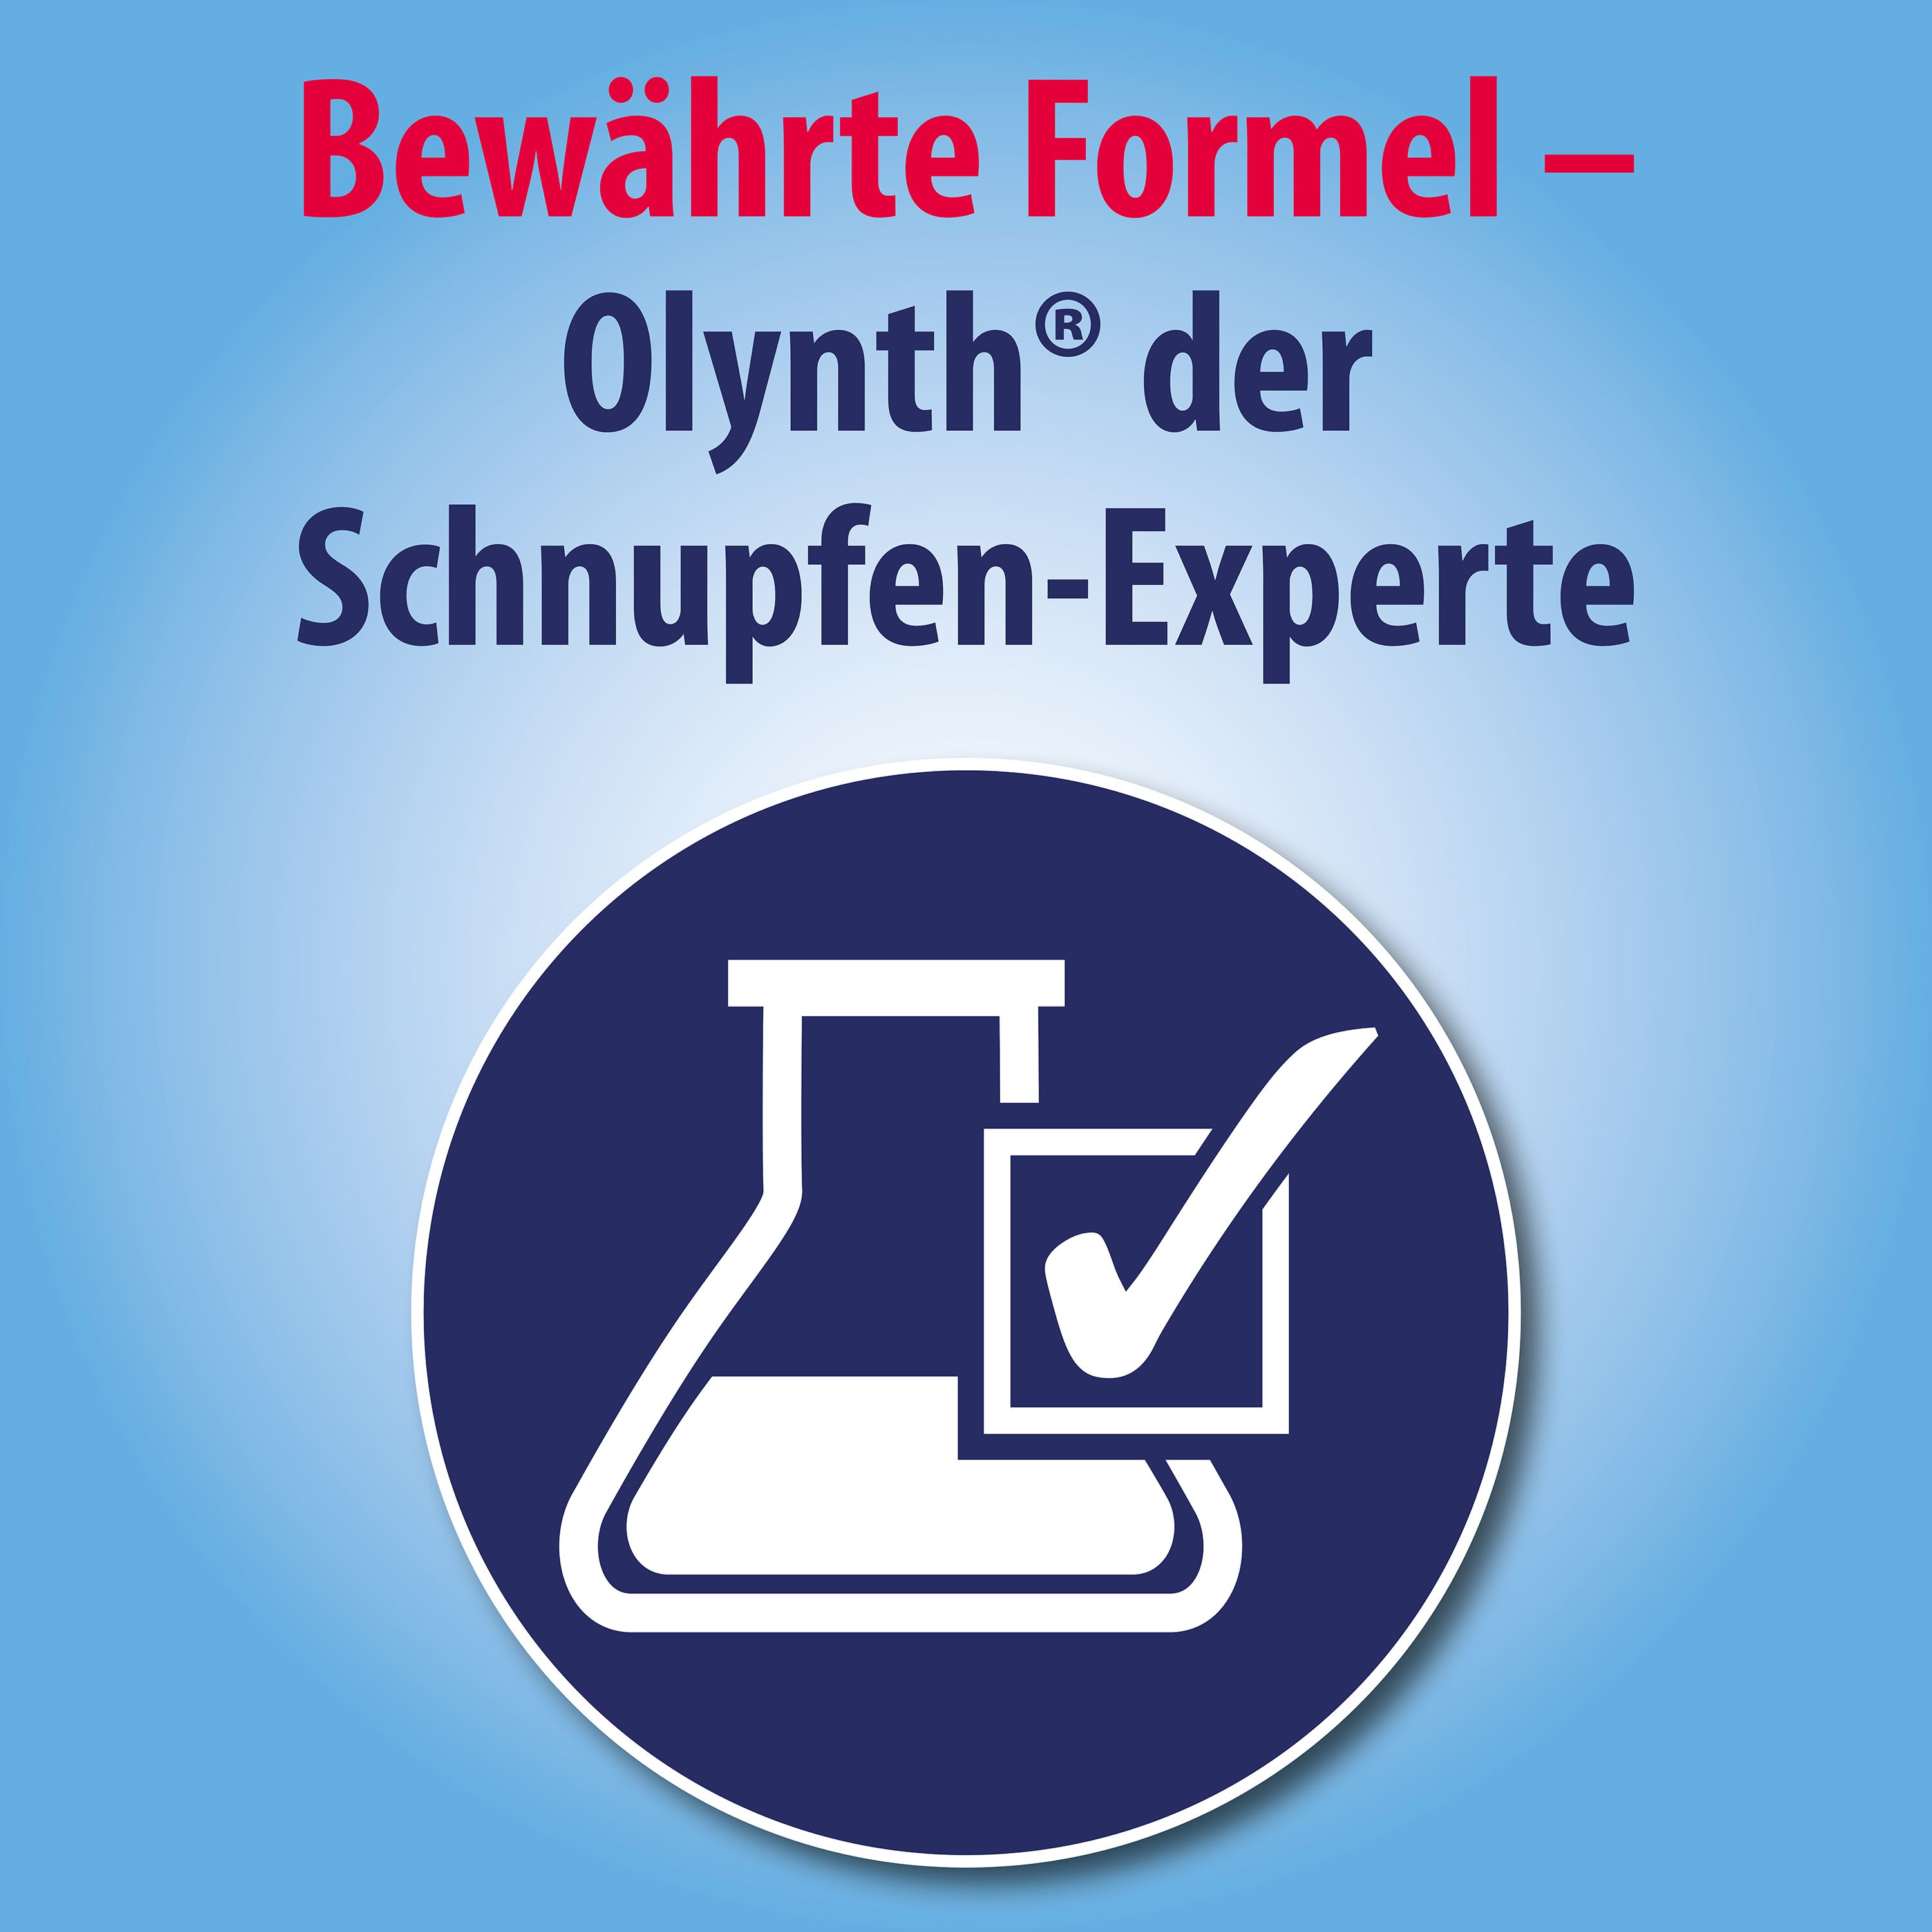 Olynth® 0,1% N Schnupfen Dosierspray